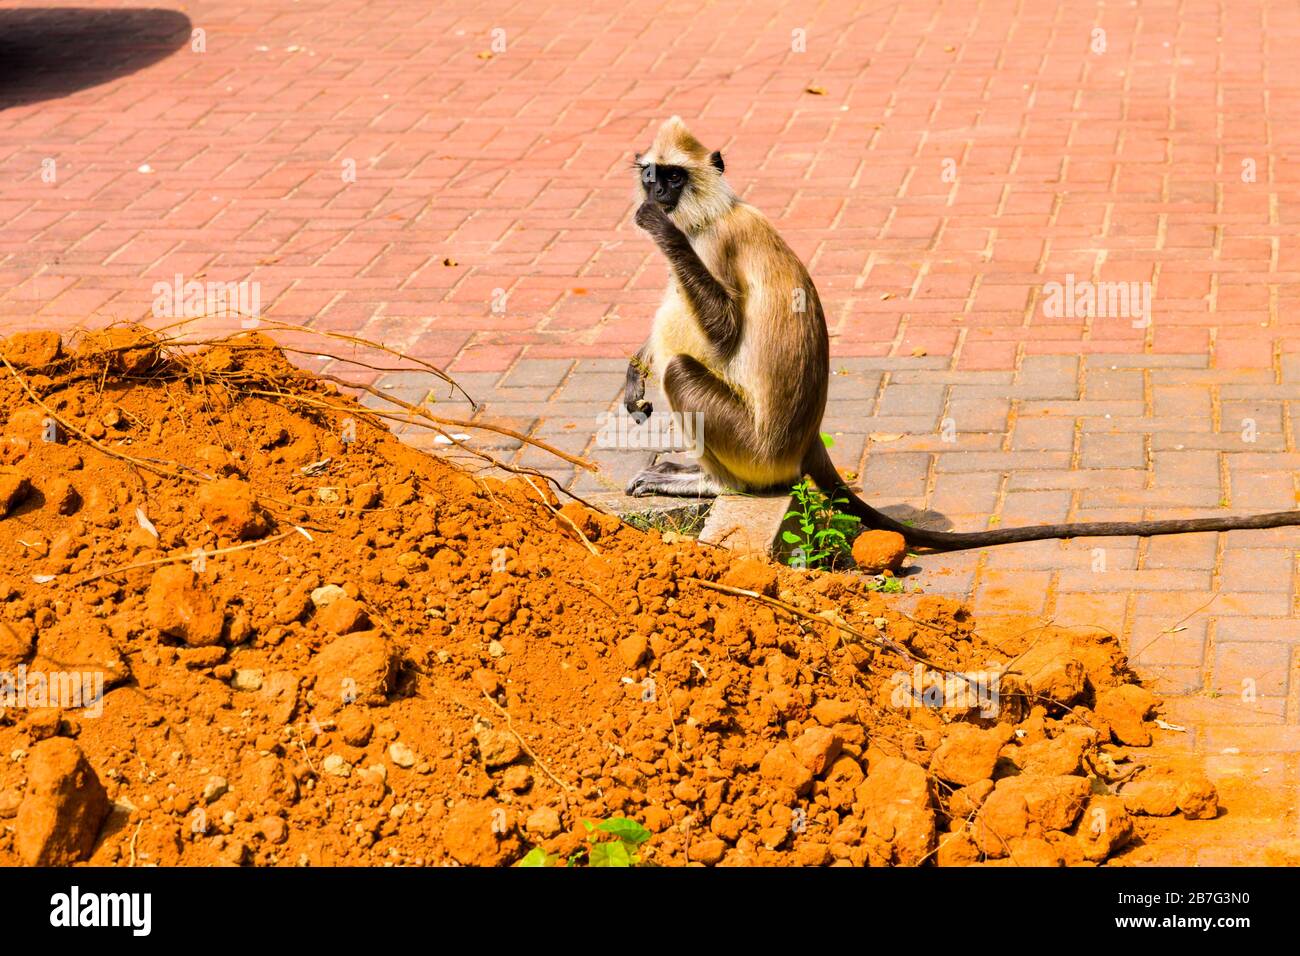 Sri Lanka Ceylon Cultural Triangle Anuradhapura Polonnaruwa Rankot Vihara primate black faced monkey Langur Semnopithecus Entellus eating plant Stock Photo